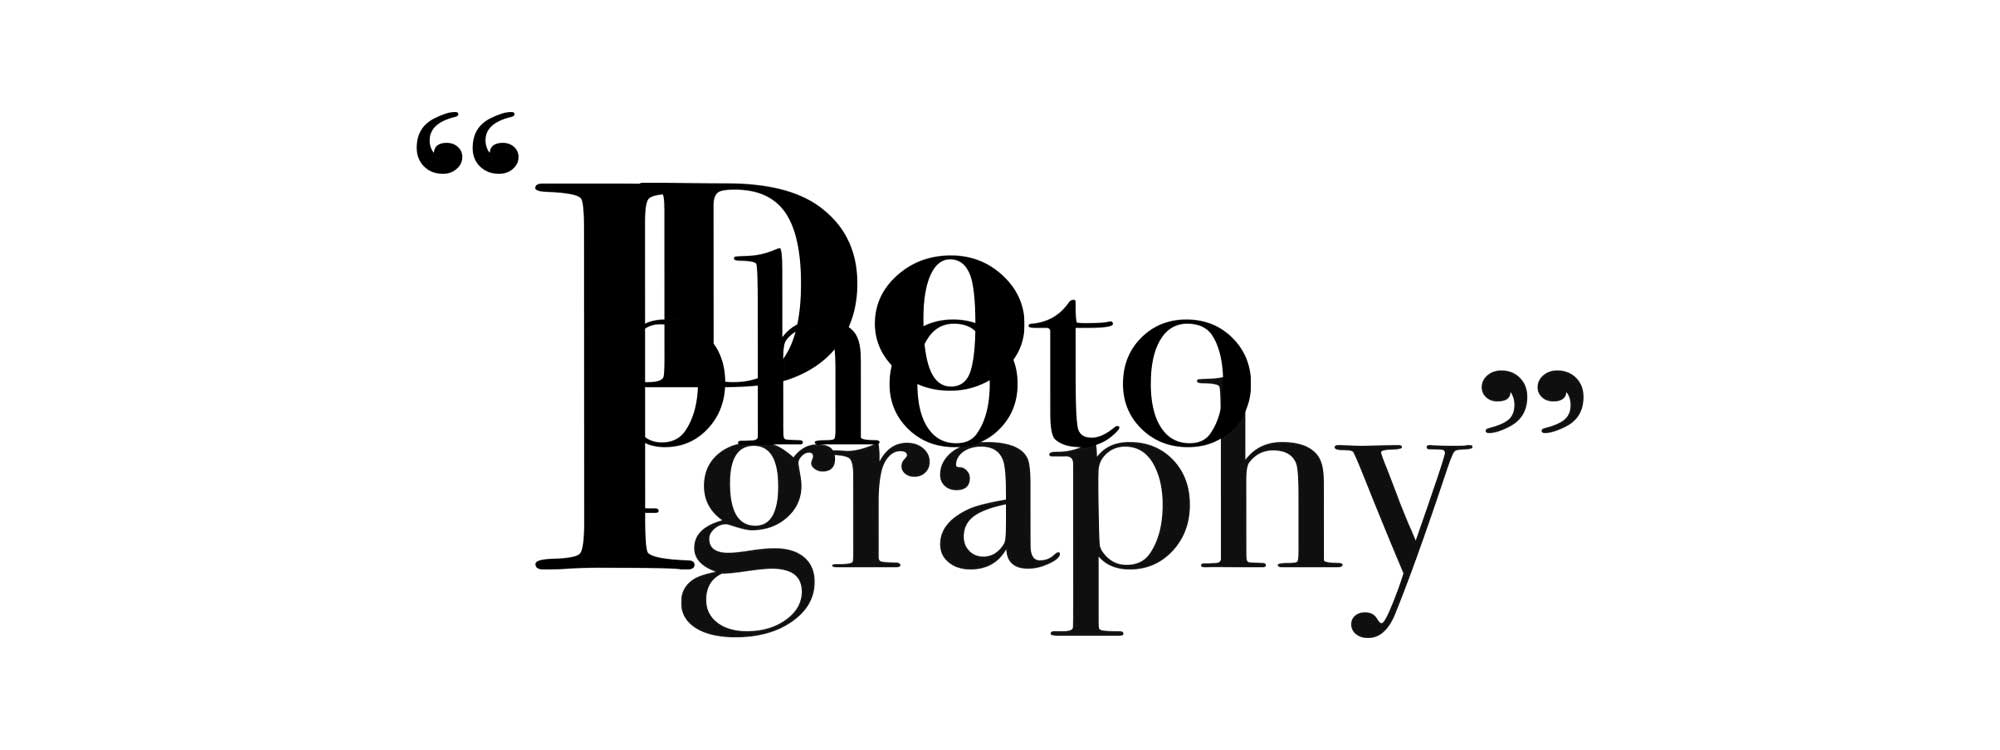 Ido photography